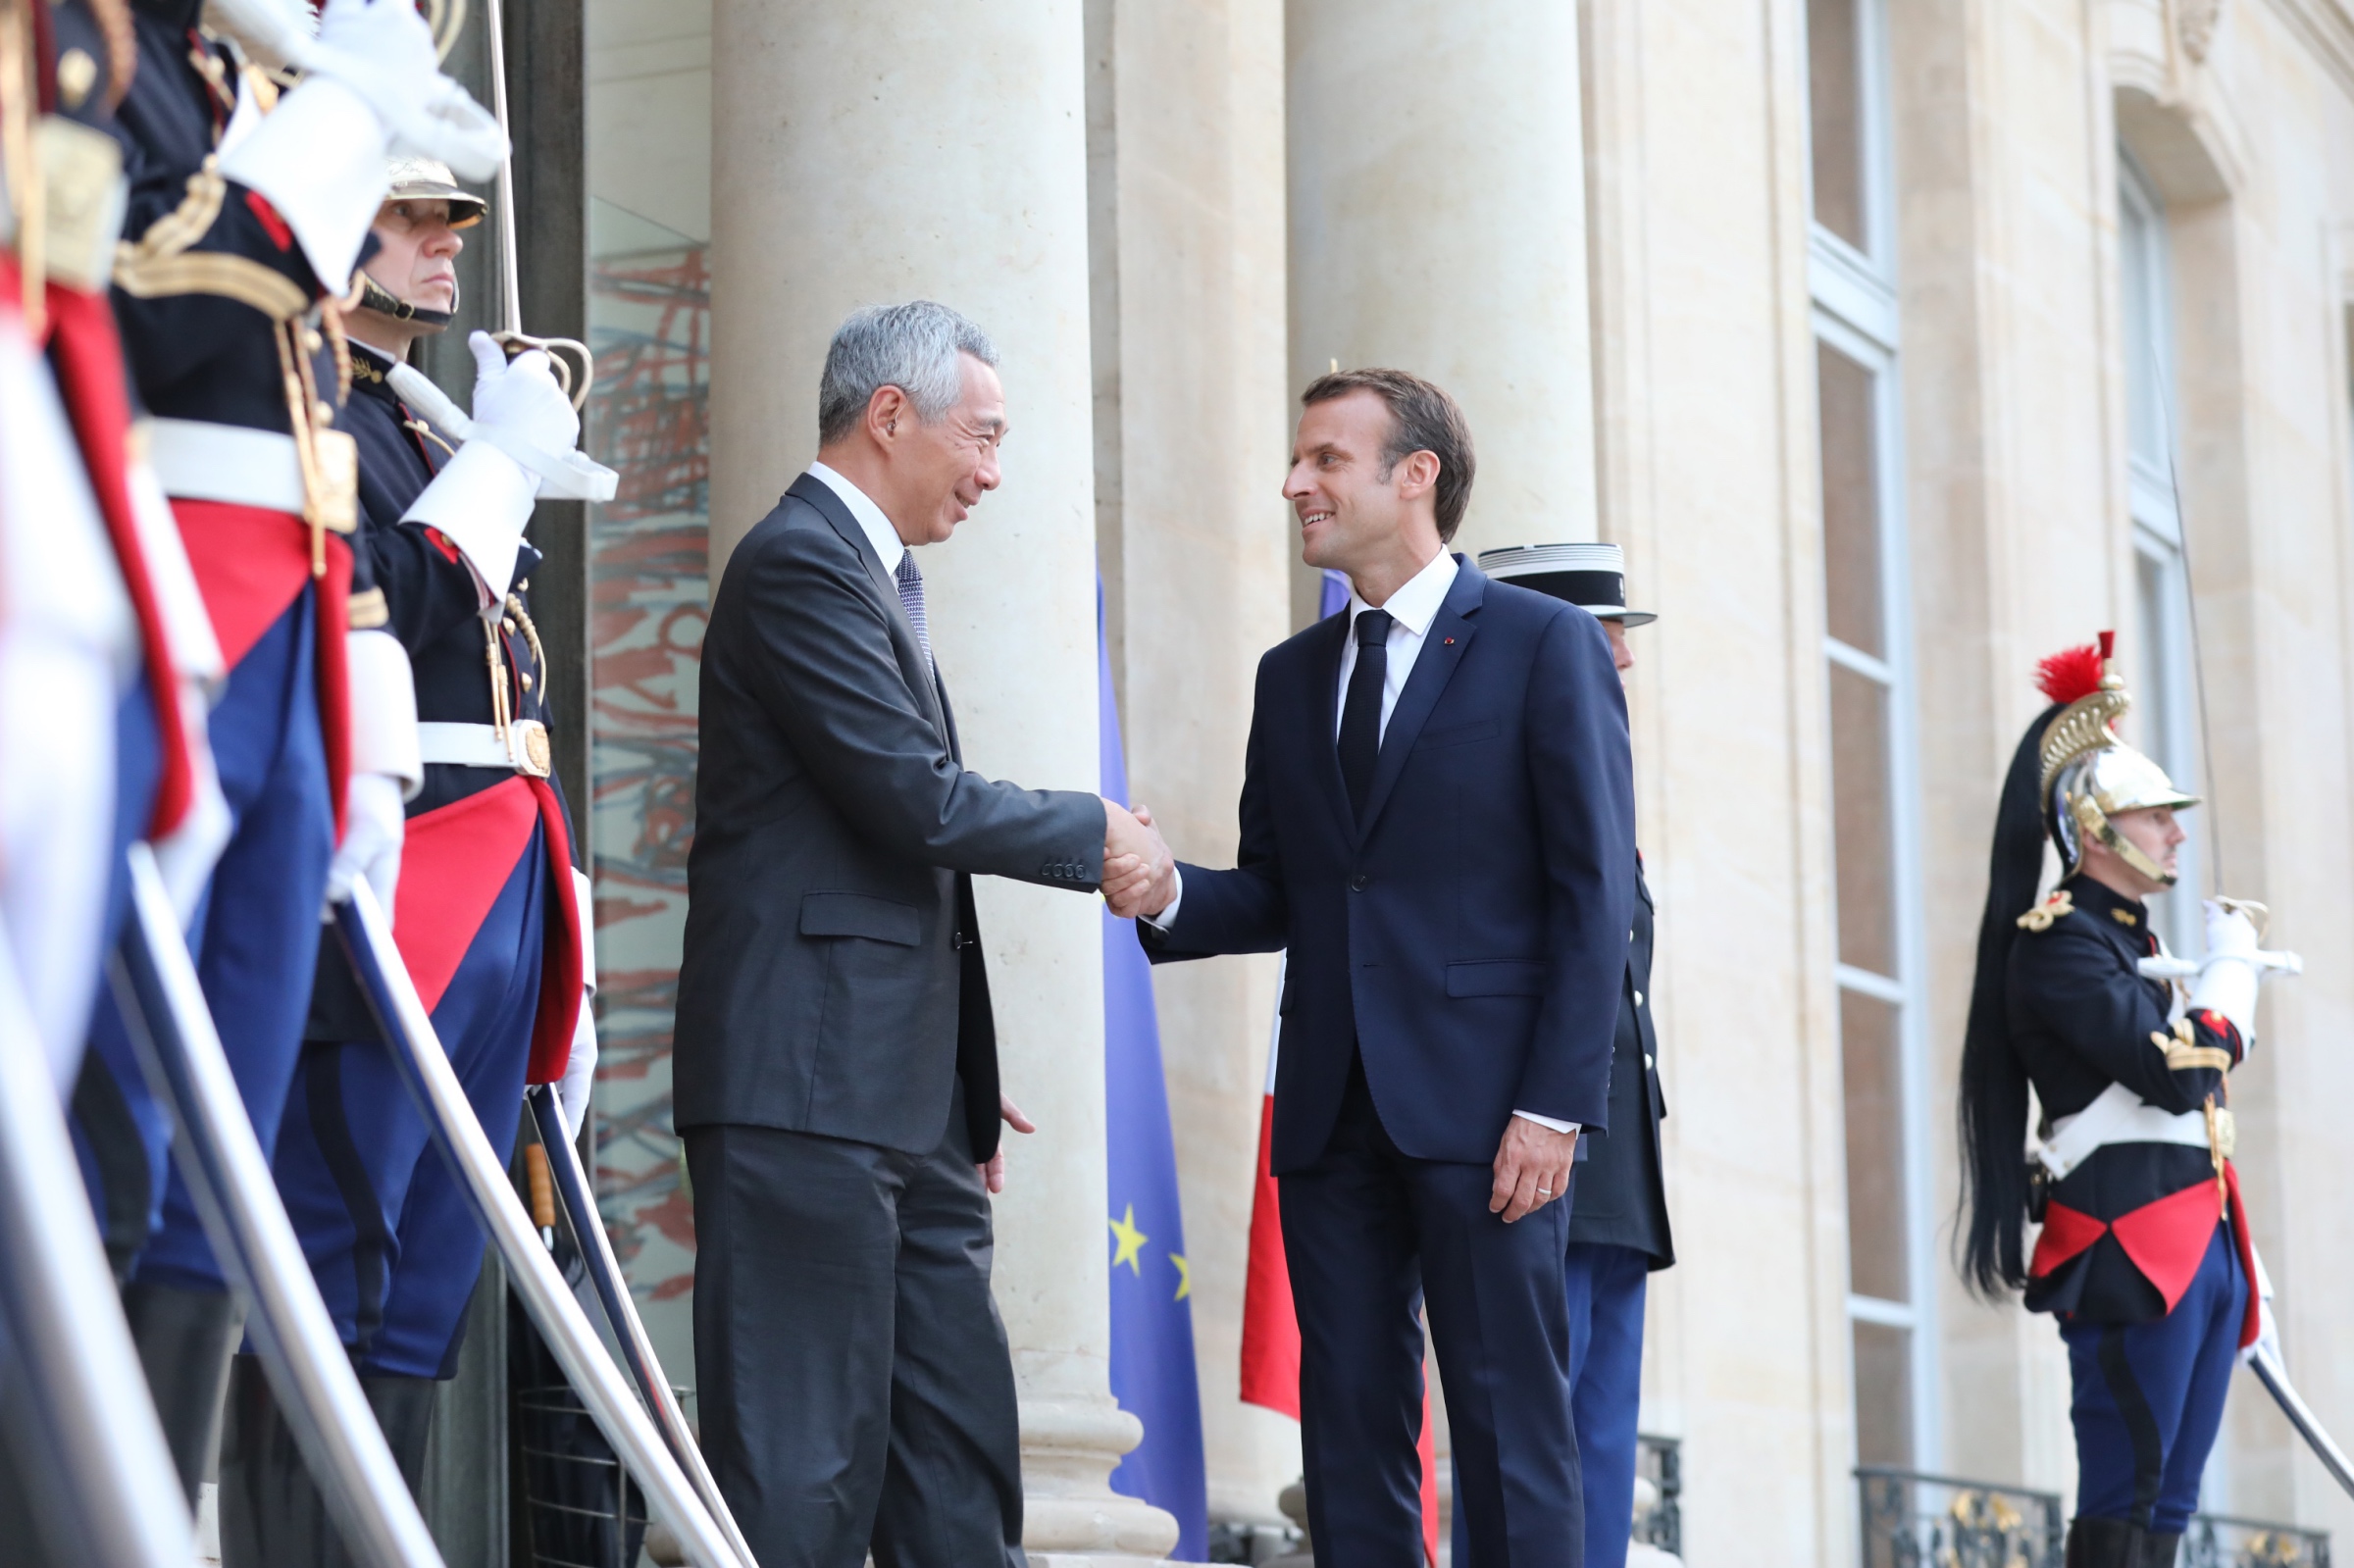 PM Lee Hsien Loong meeting French President Emmanuel Macron on 13 Jul 2018 (MCI Photo by Fyrol)